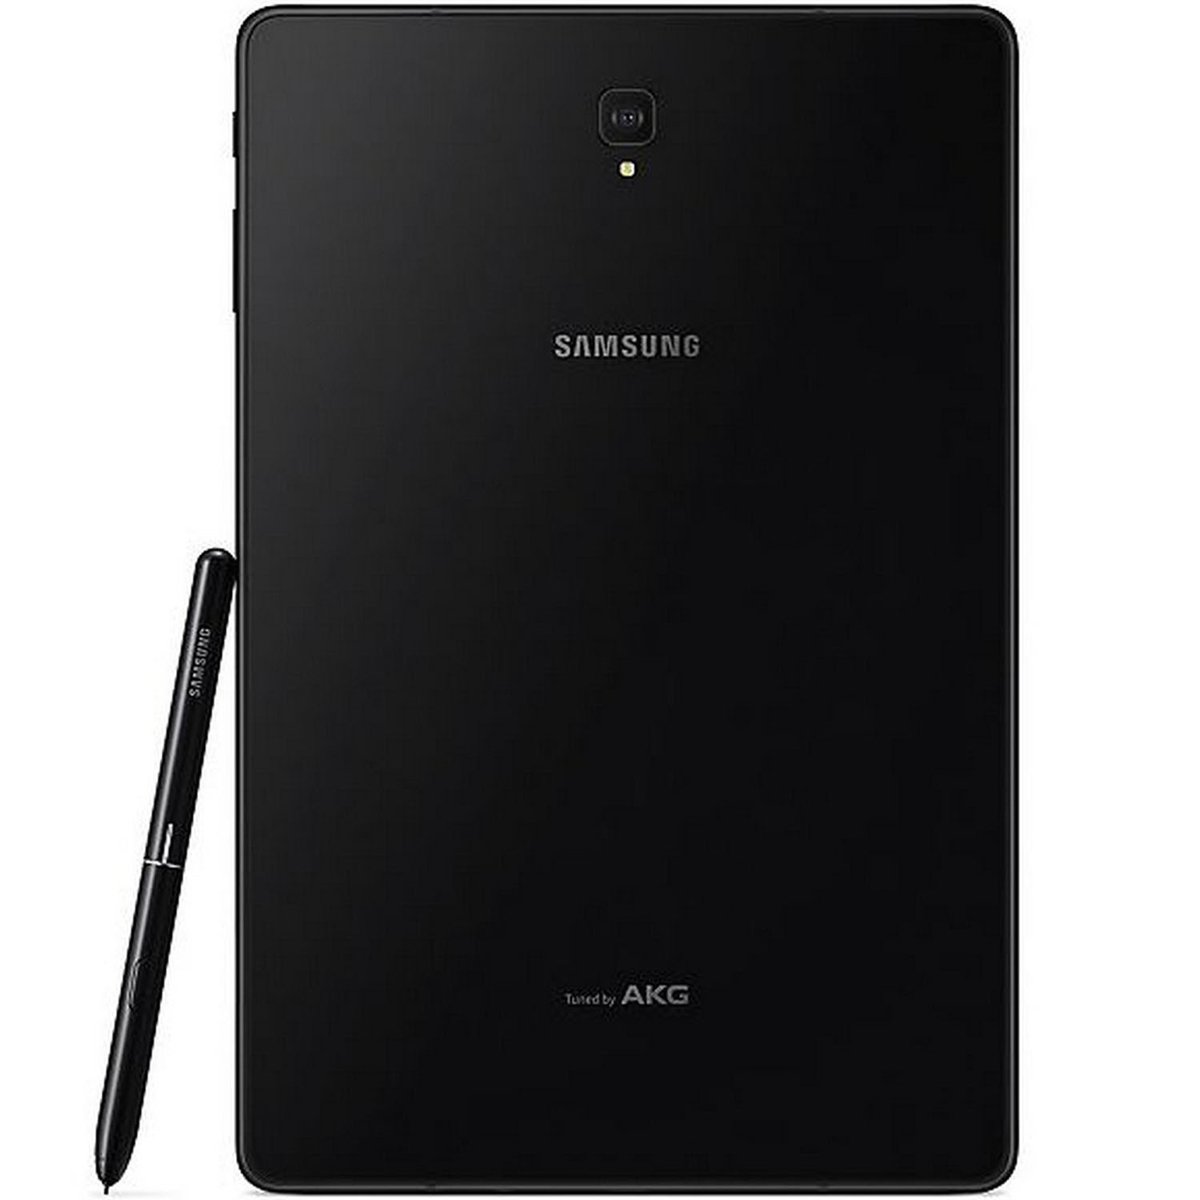 Samsung Tab S4 SM-T830 10.5inch 64GB Black